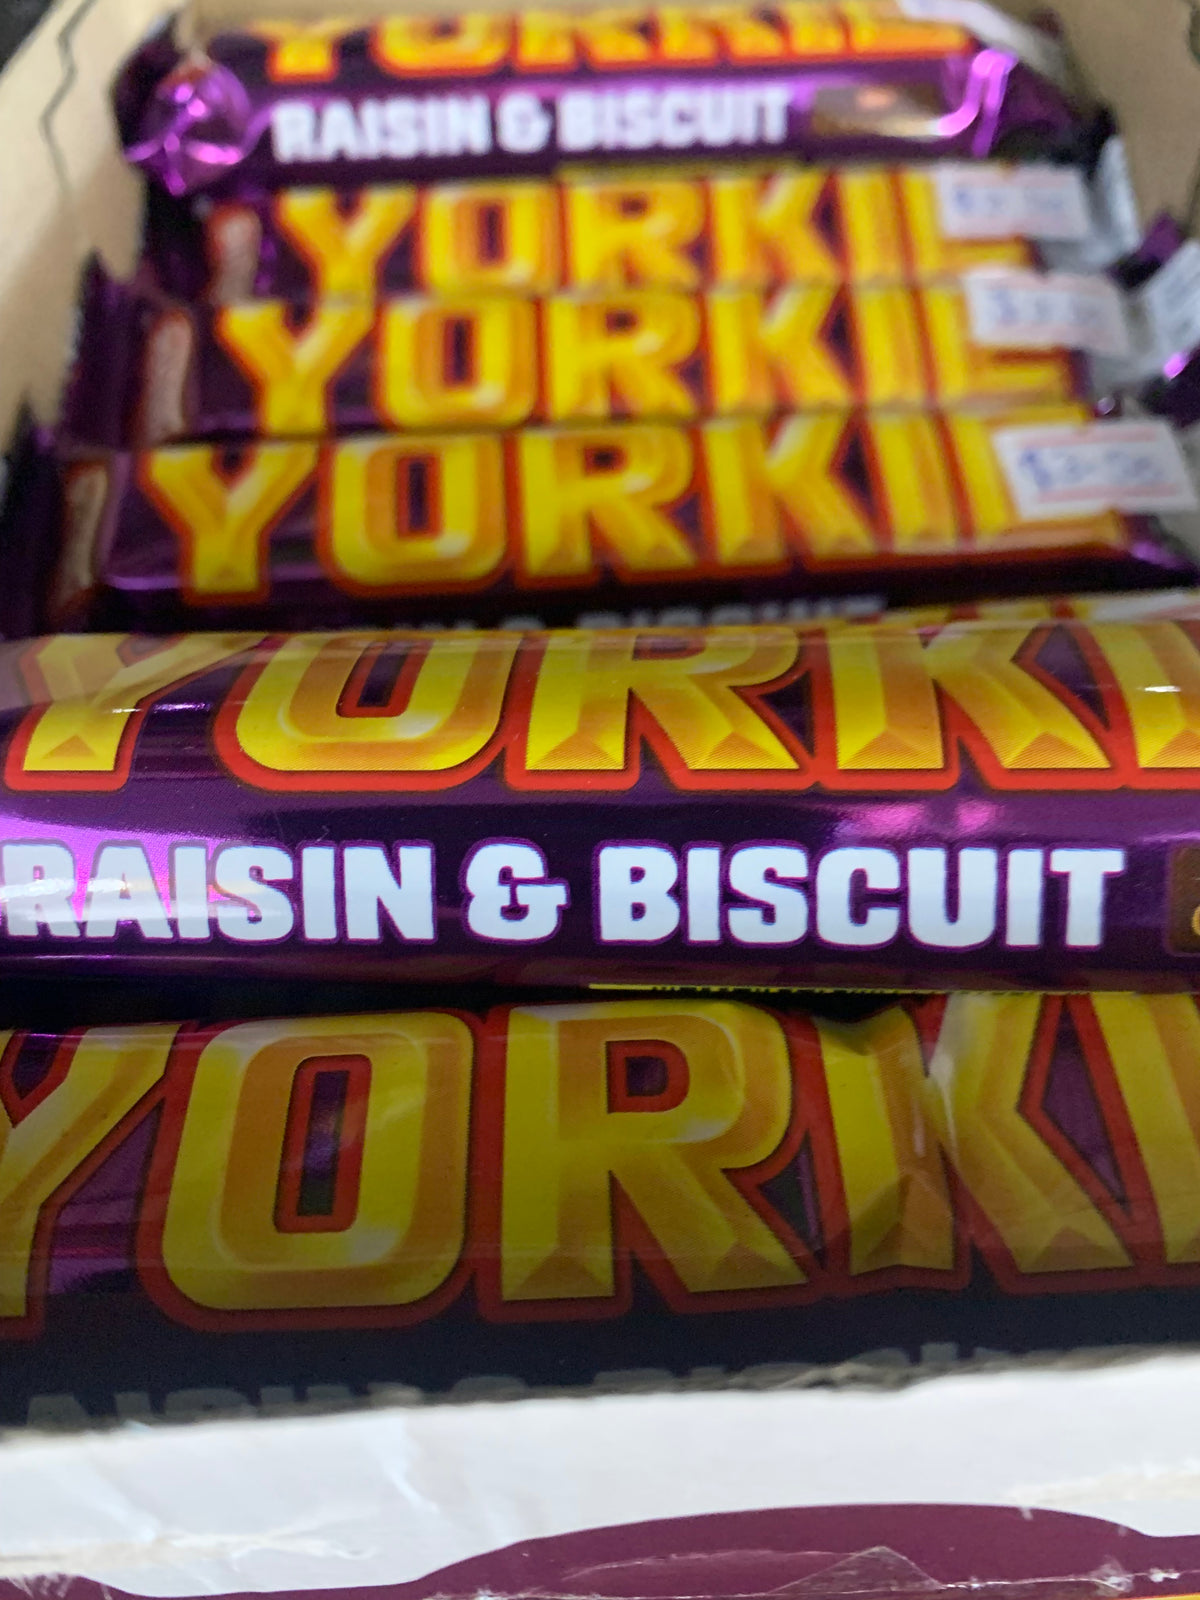 yorkie - Raisin & biscuit